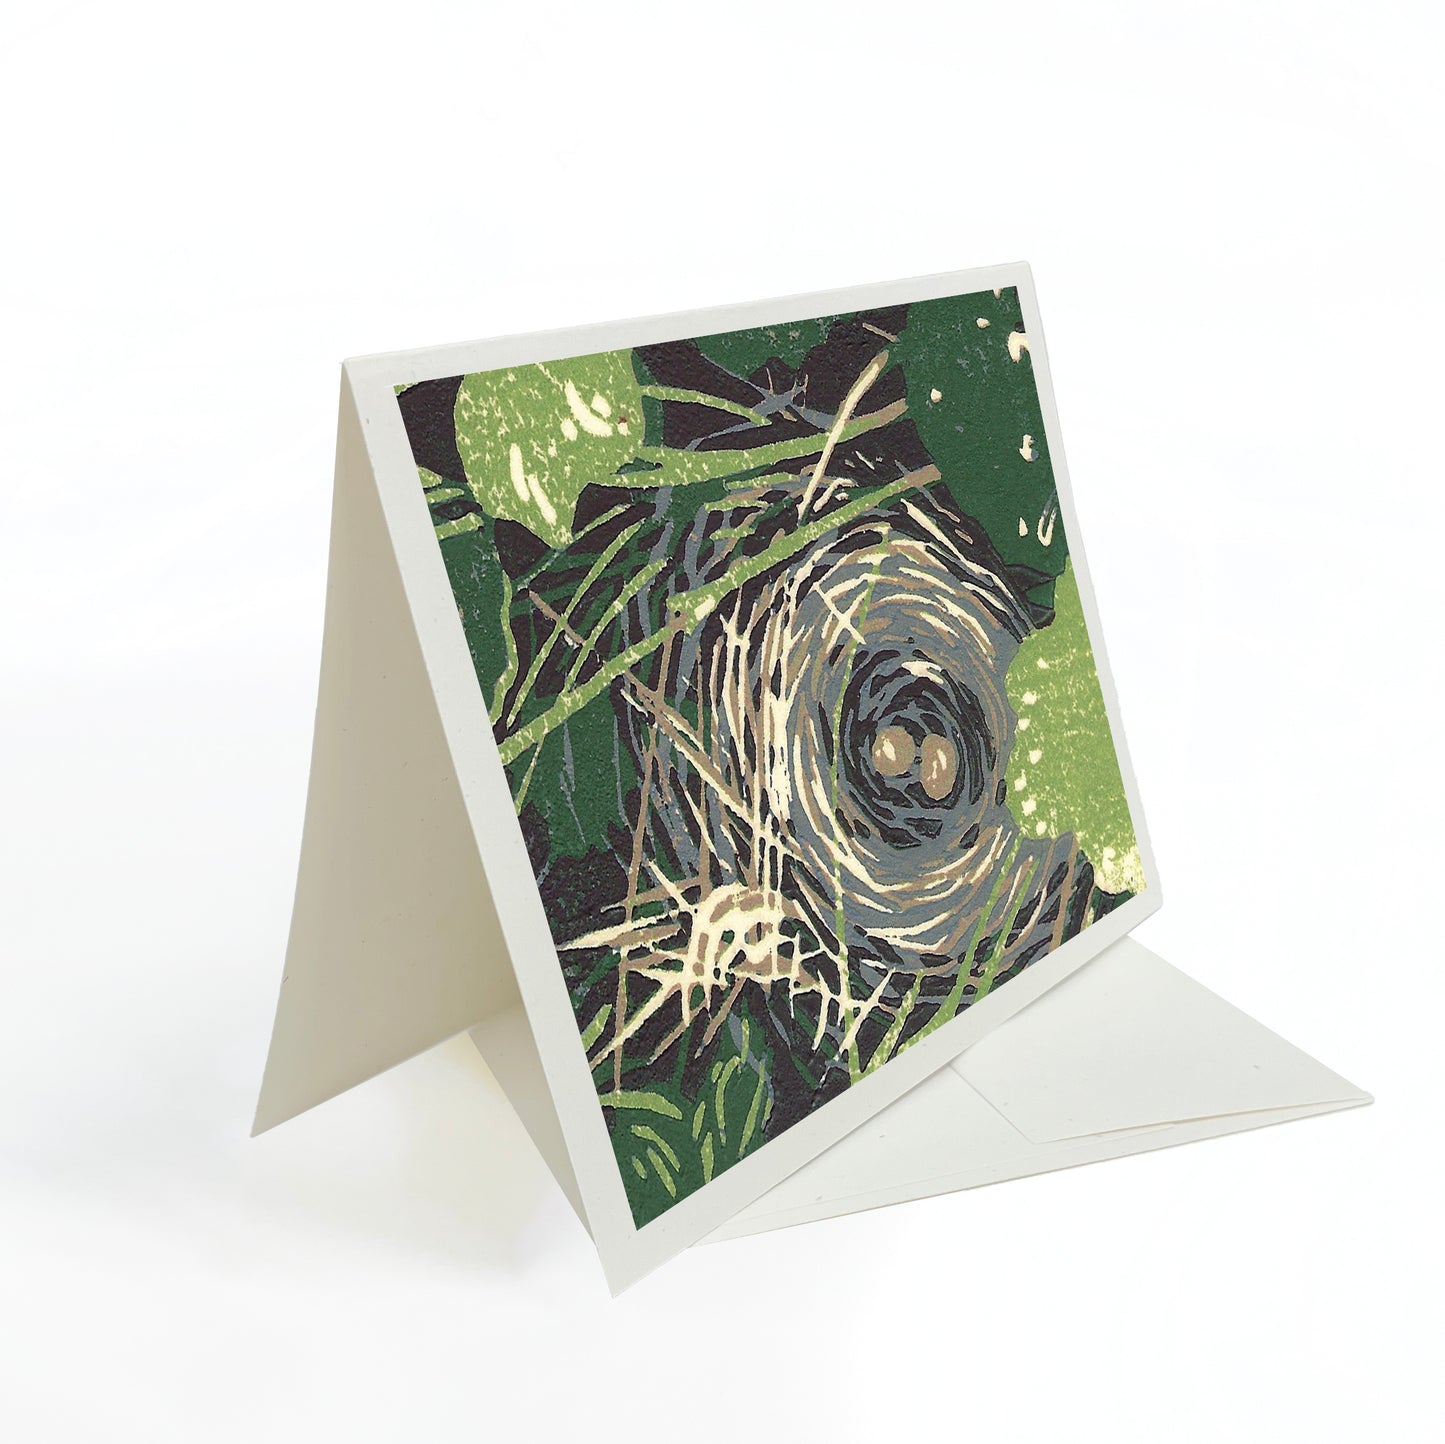 A casually elegant card featuring Michigan wildlife art by Natalia Wohletz titled Bird's Nest.